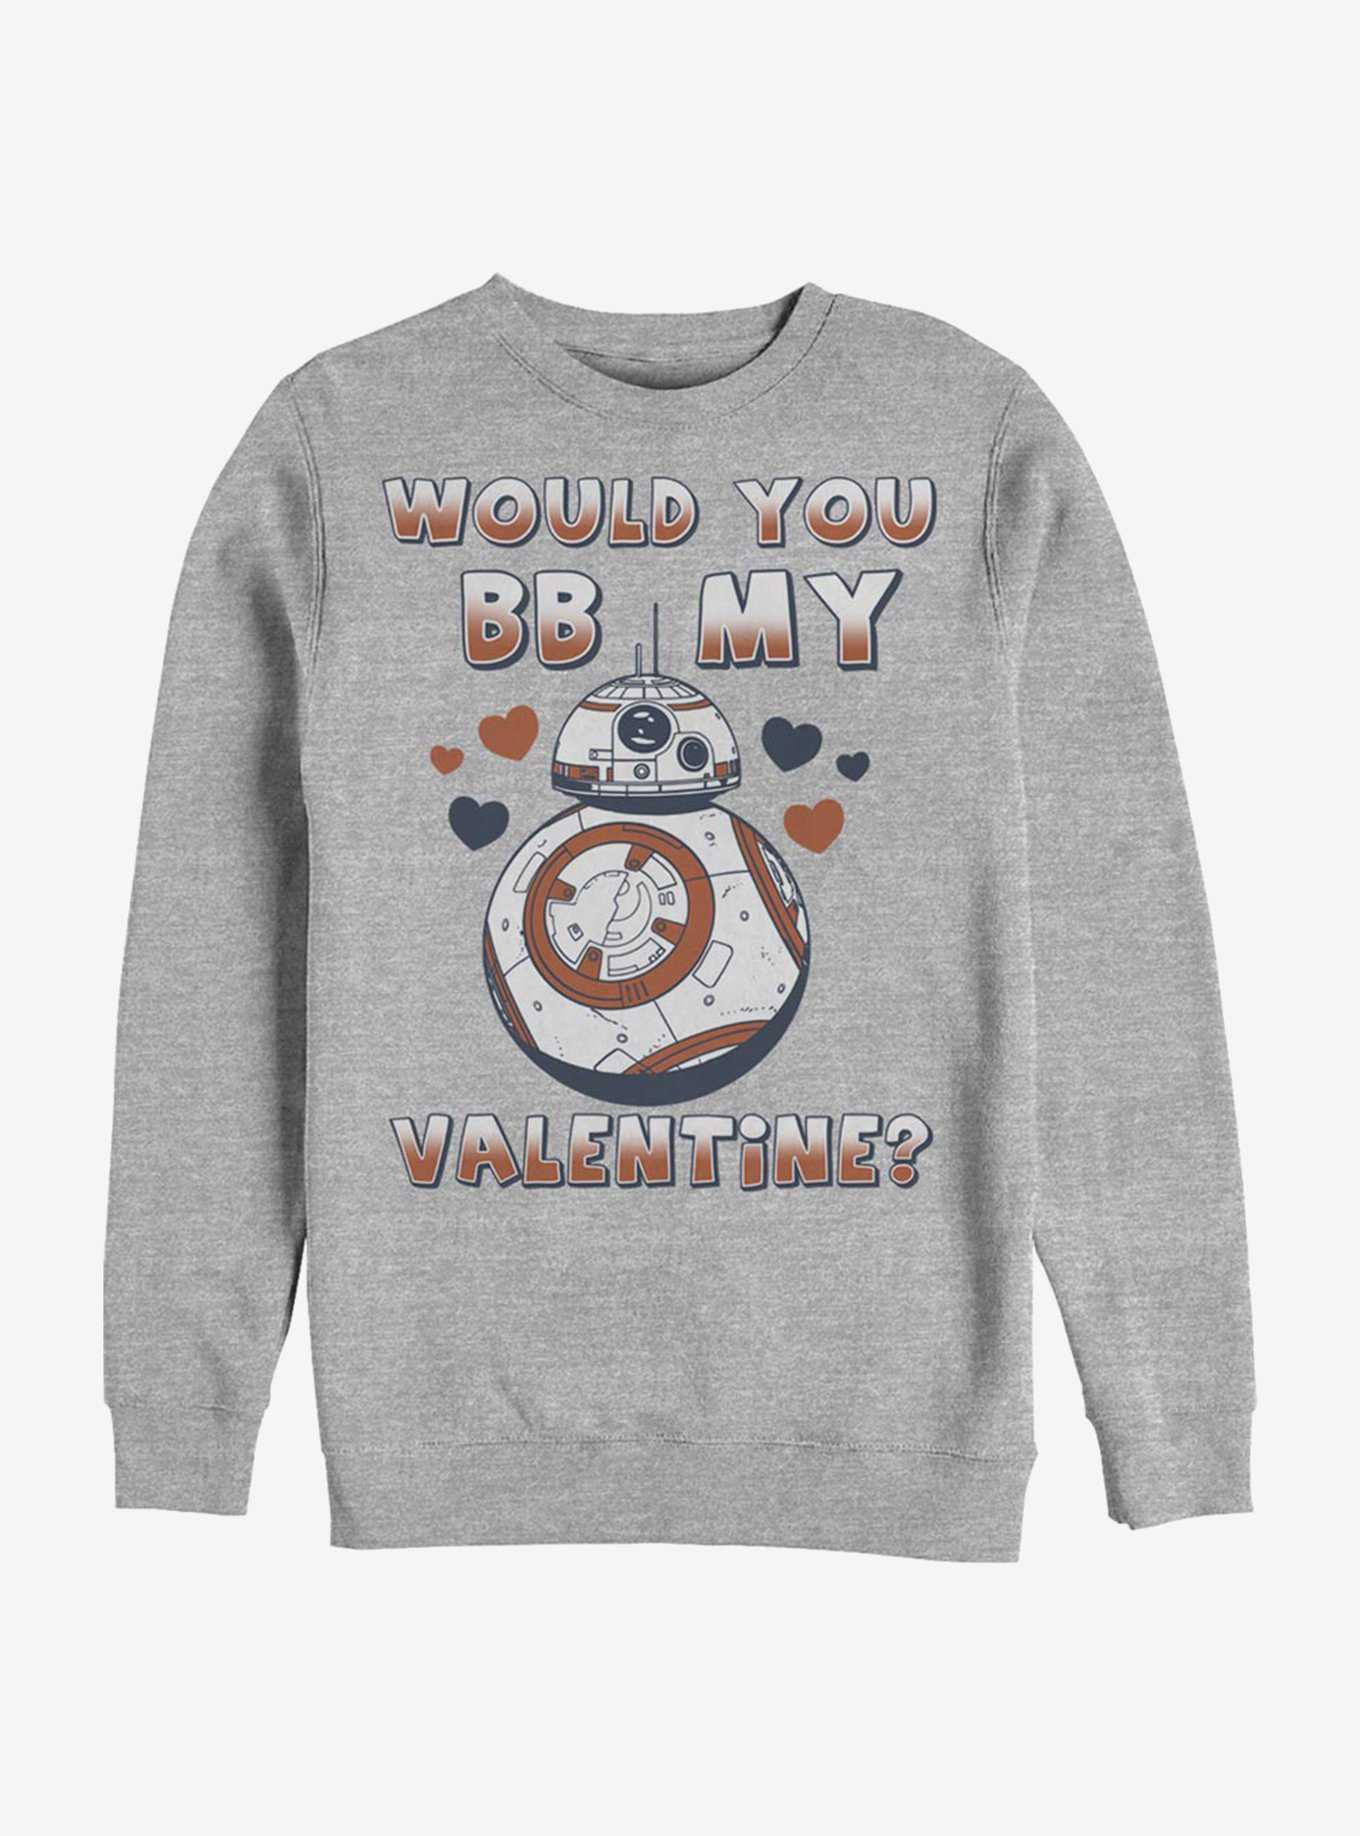 Star Wars: The Force Awakens BB-8 My Valentine Crew Sweatshirt, , hi-res